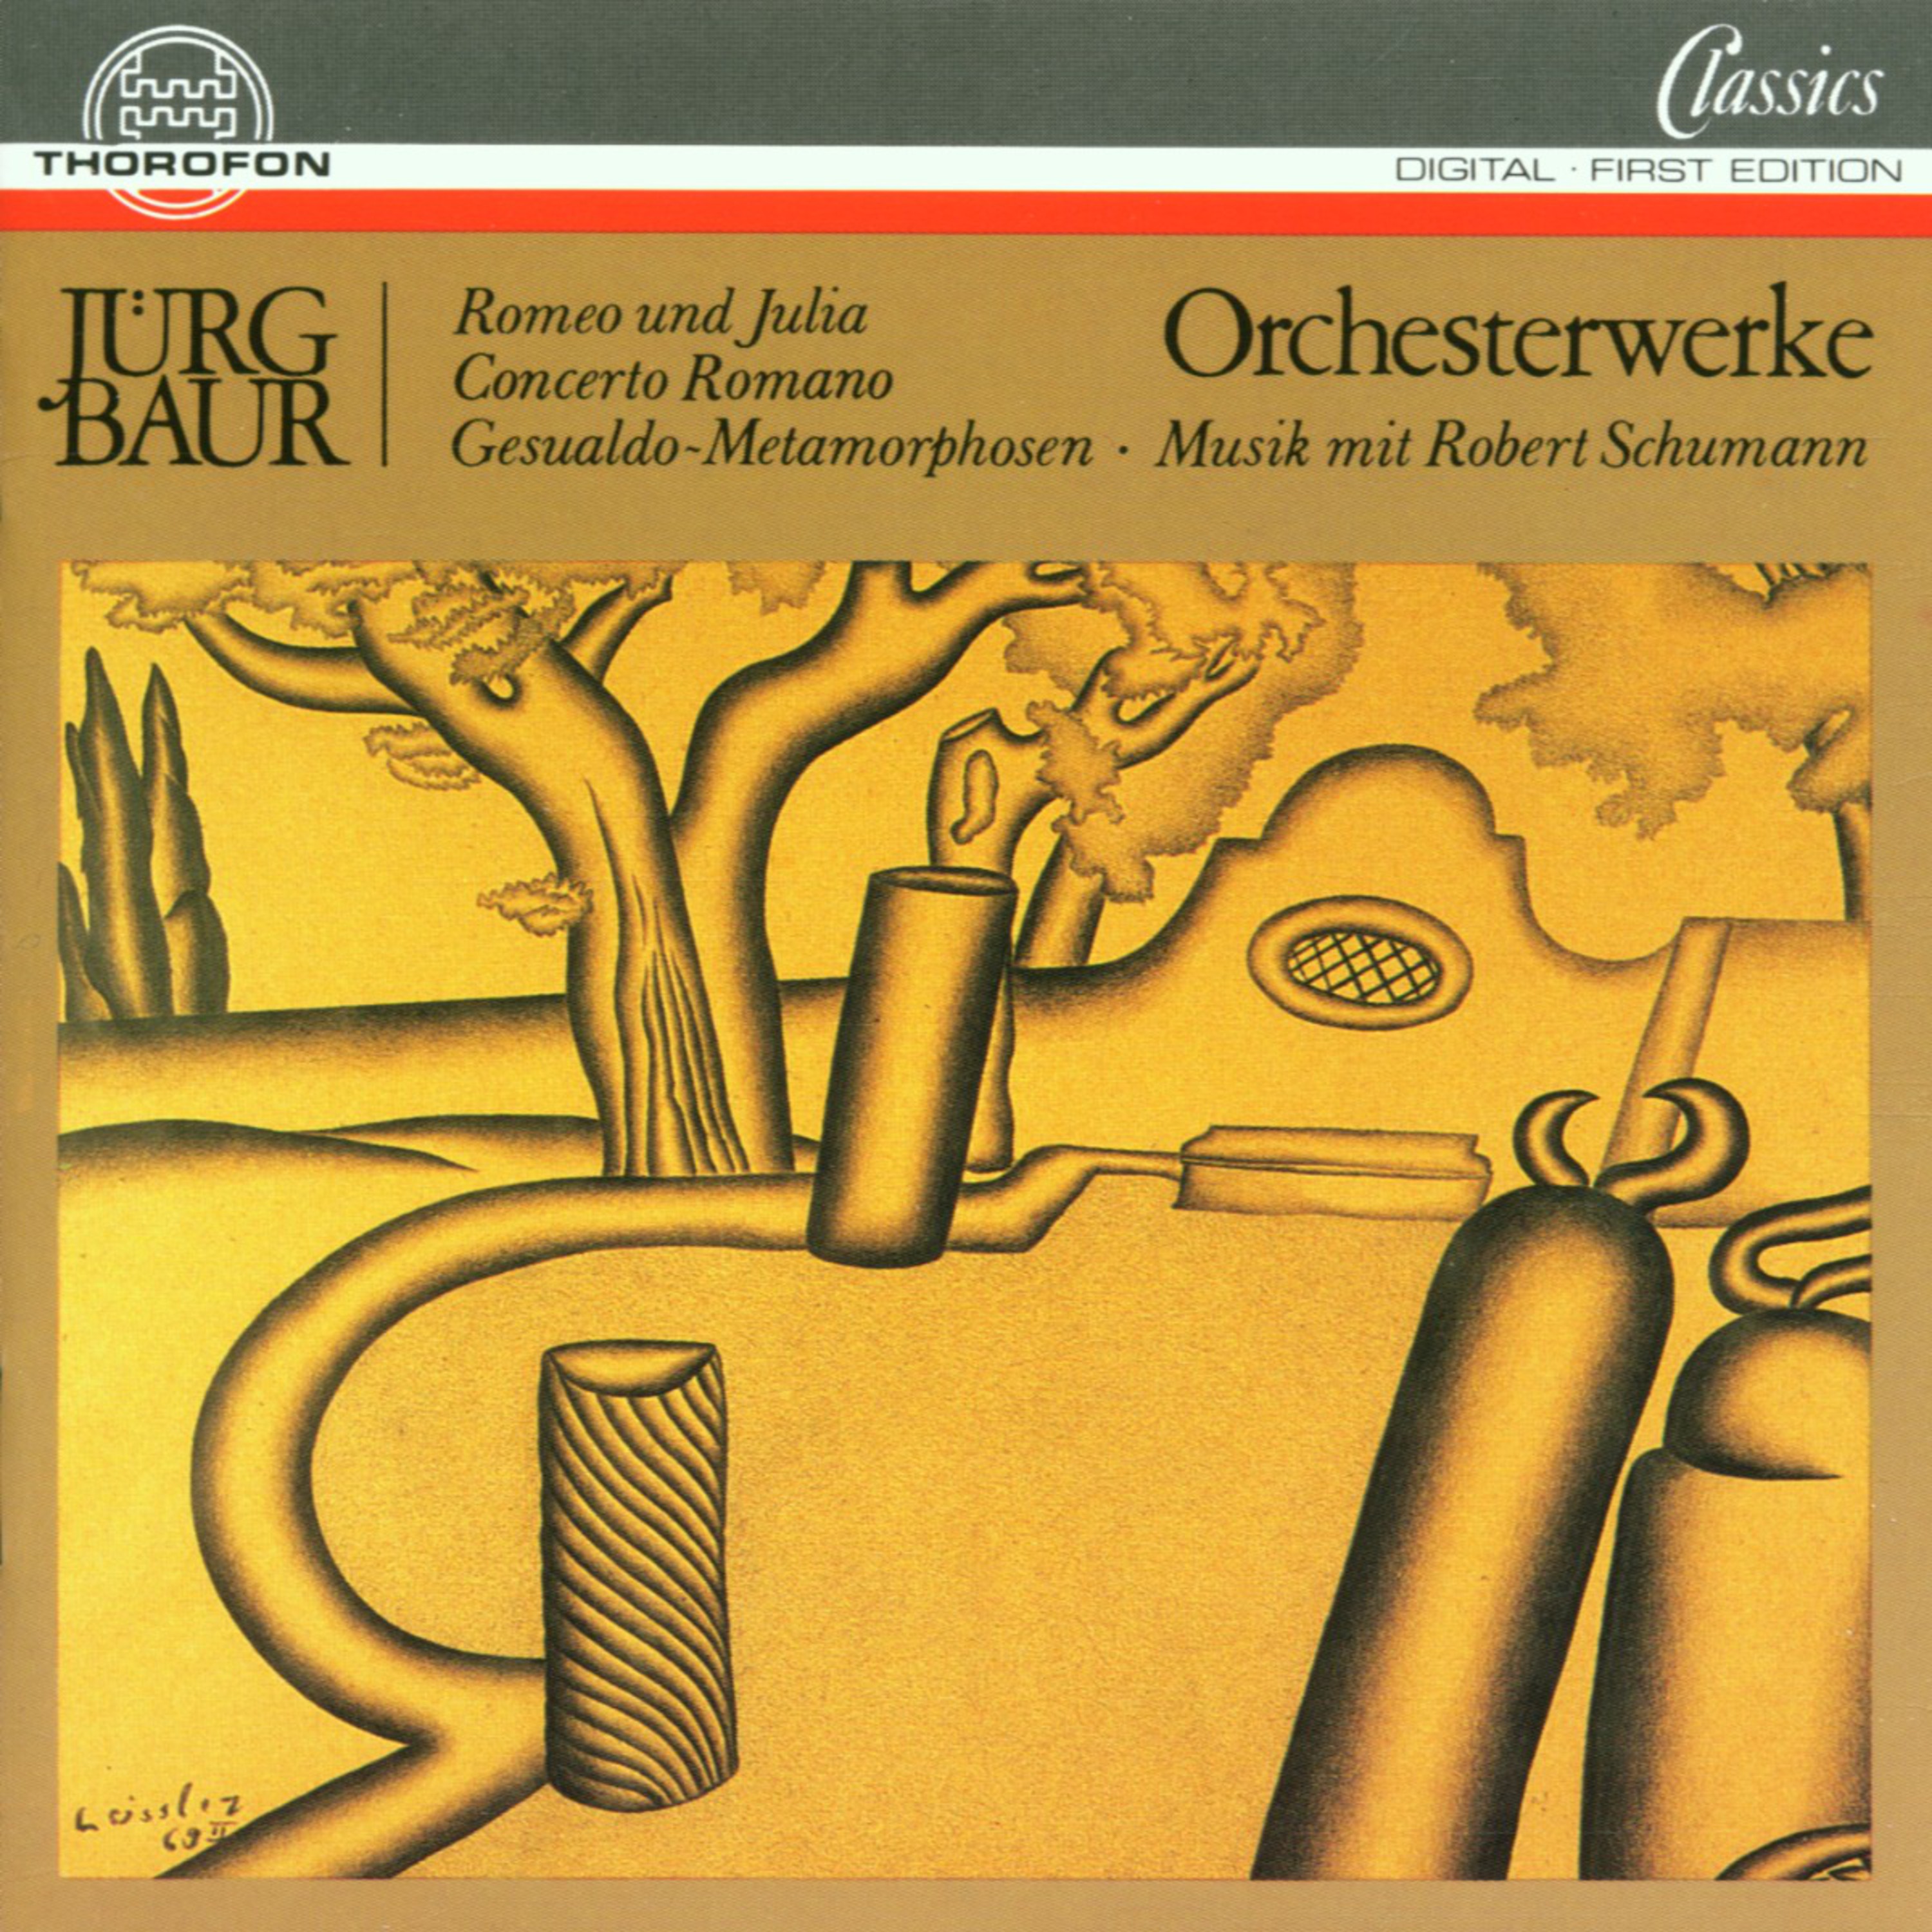 Concerto Romano fü r Oboe und Orchester: II. Zikaden